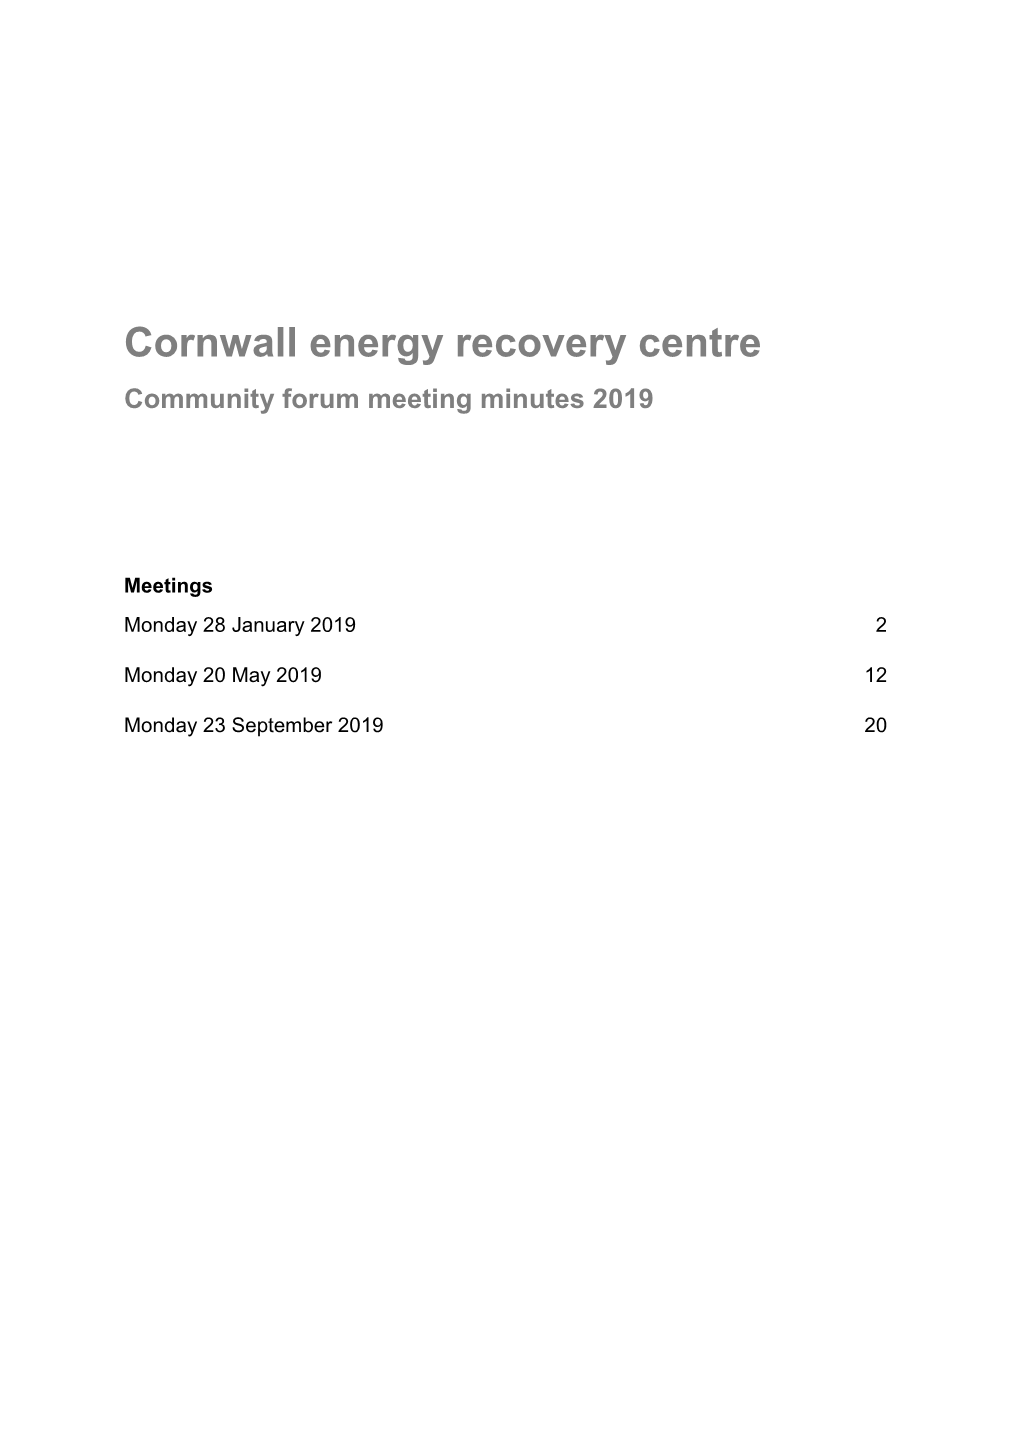 Community Forum Meeting Minutes 2019